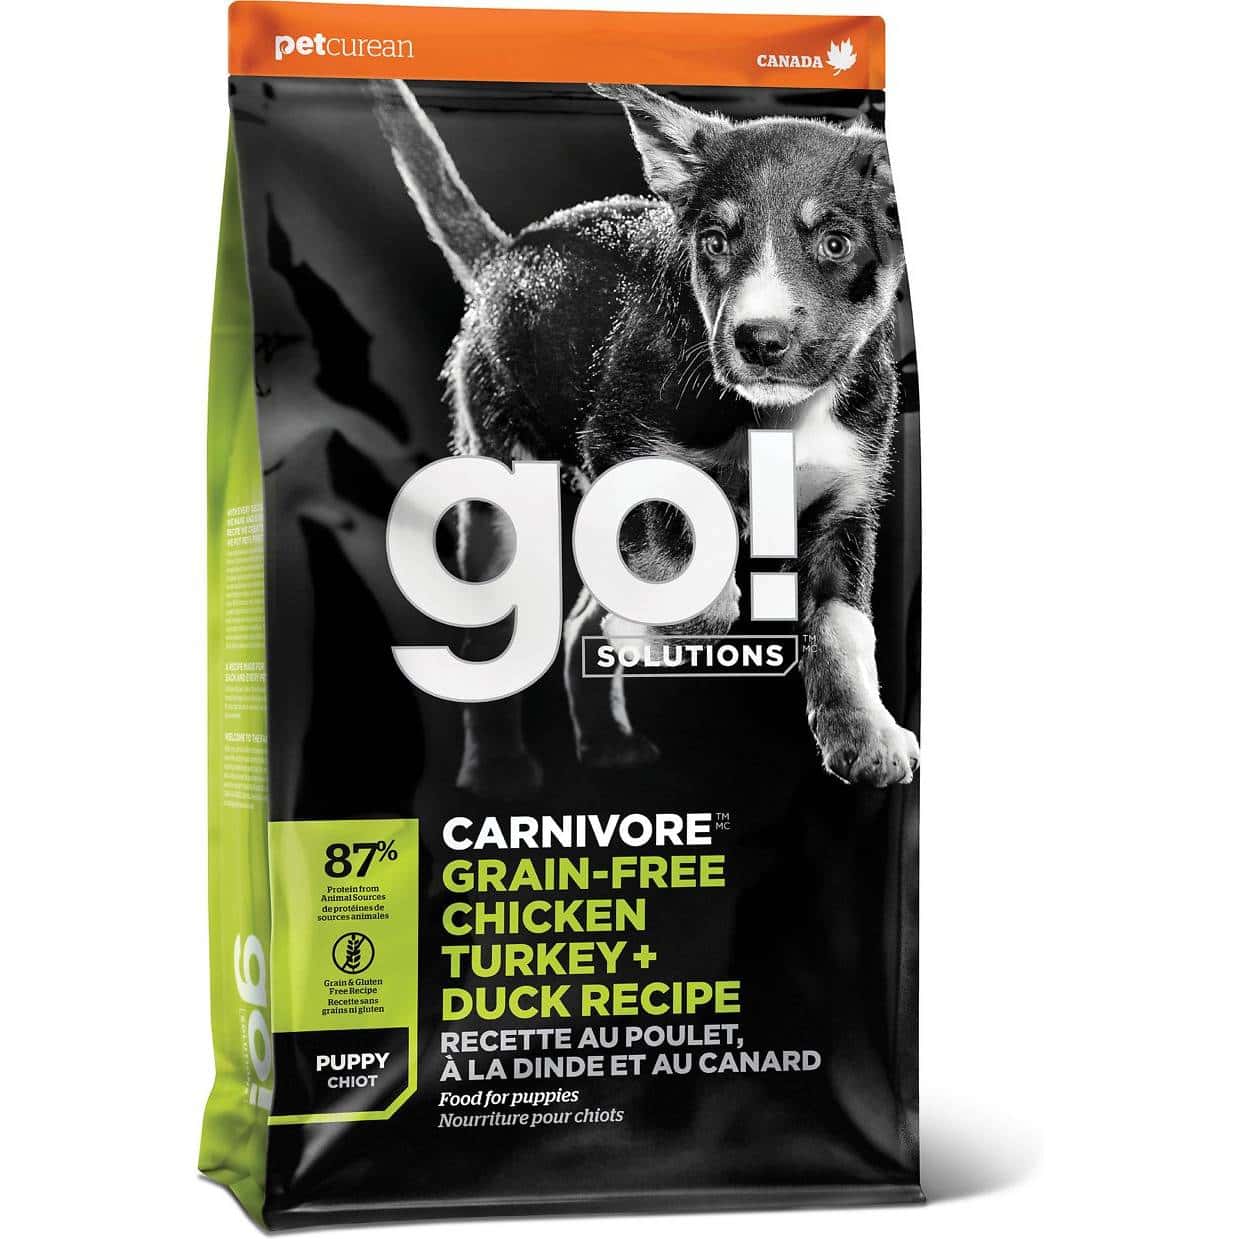 Go! Solutions Carnivore Grain-Free Chicken, Turkey + Duck Puppy Recipe (1)